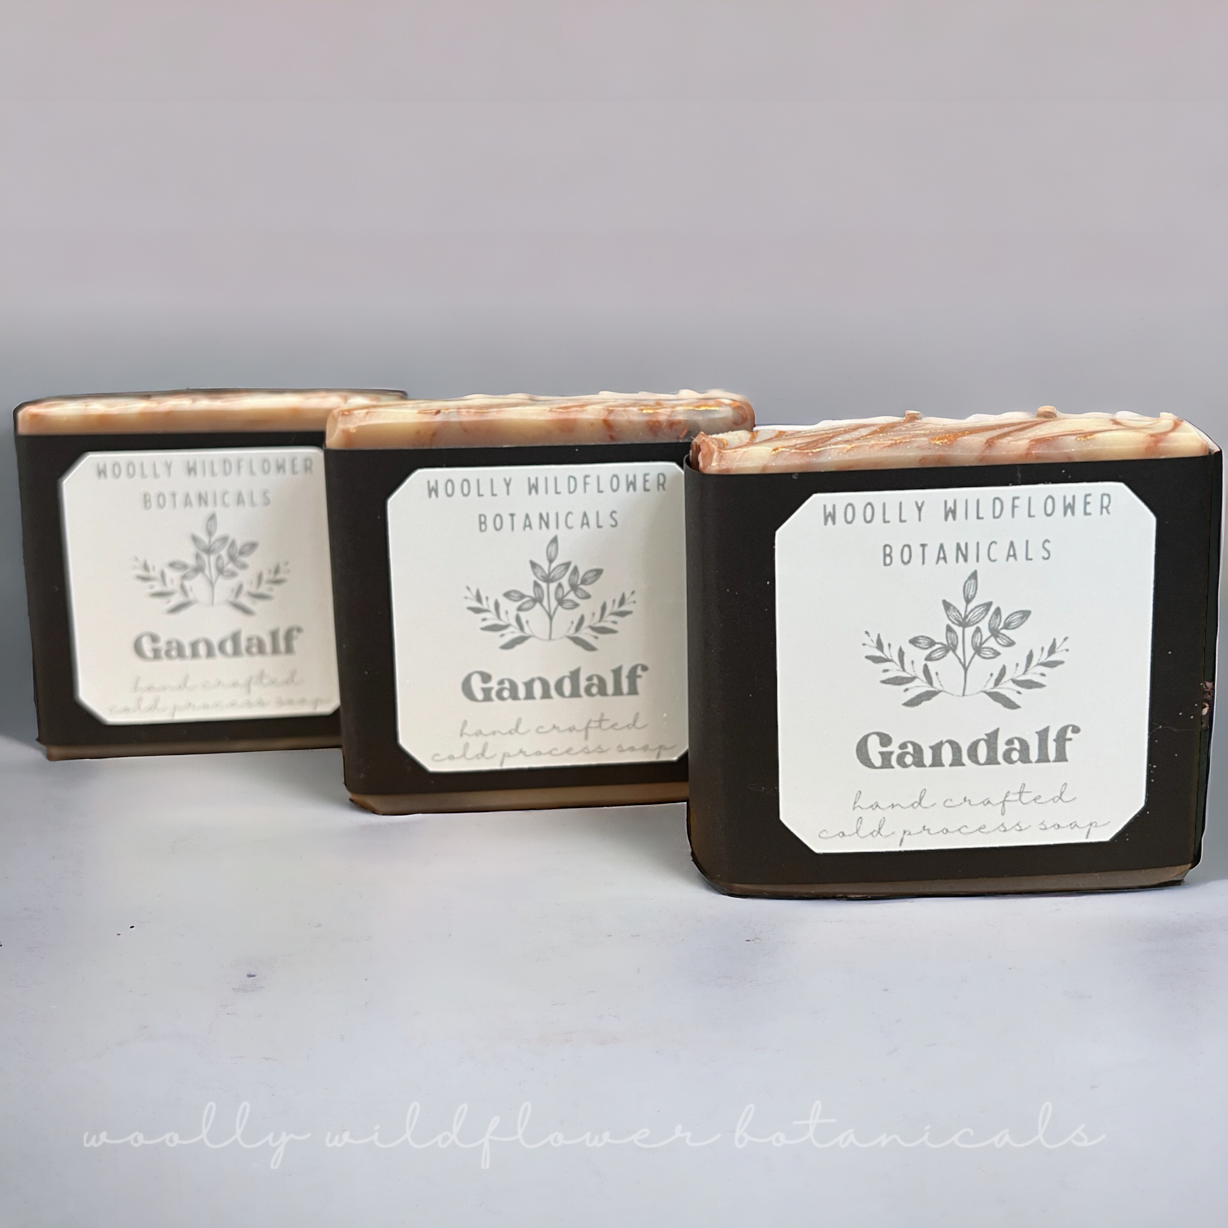 GANDALF cold process bar soap